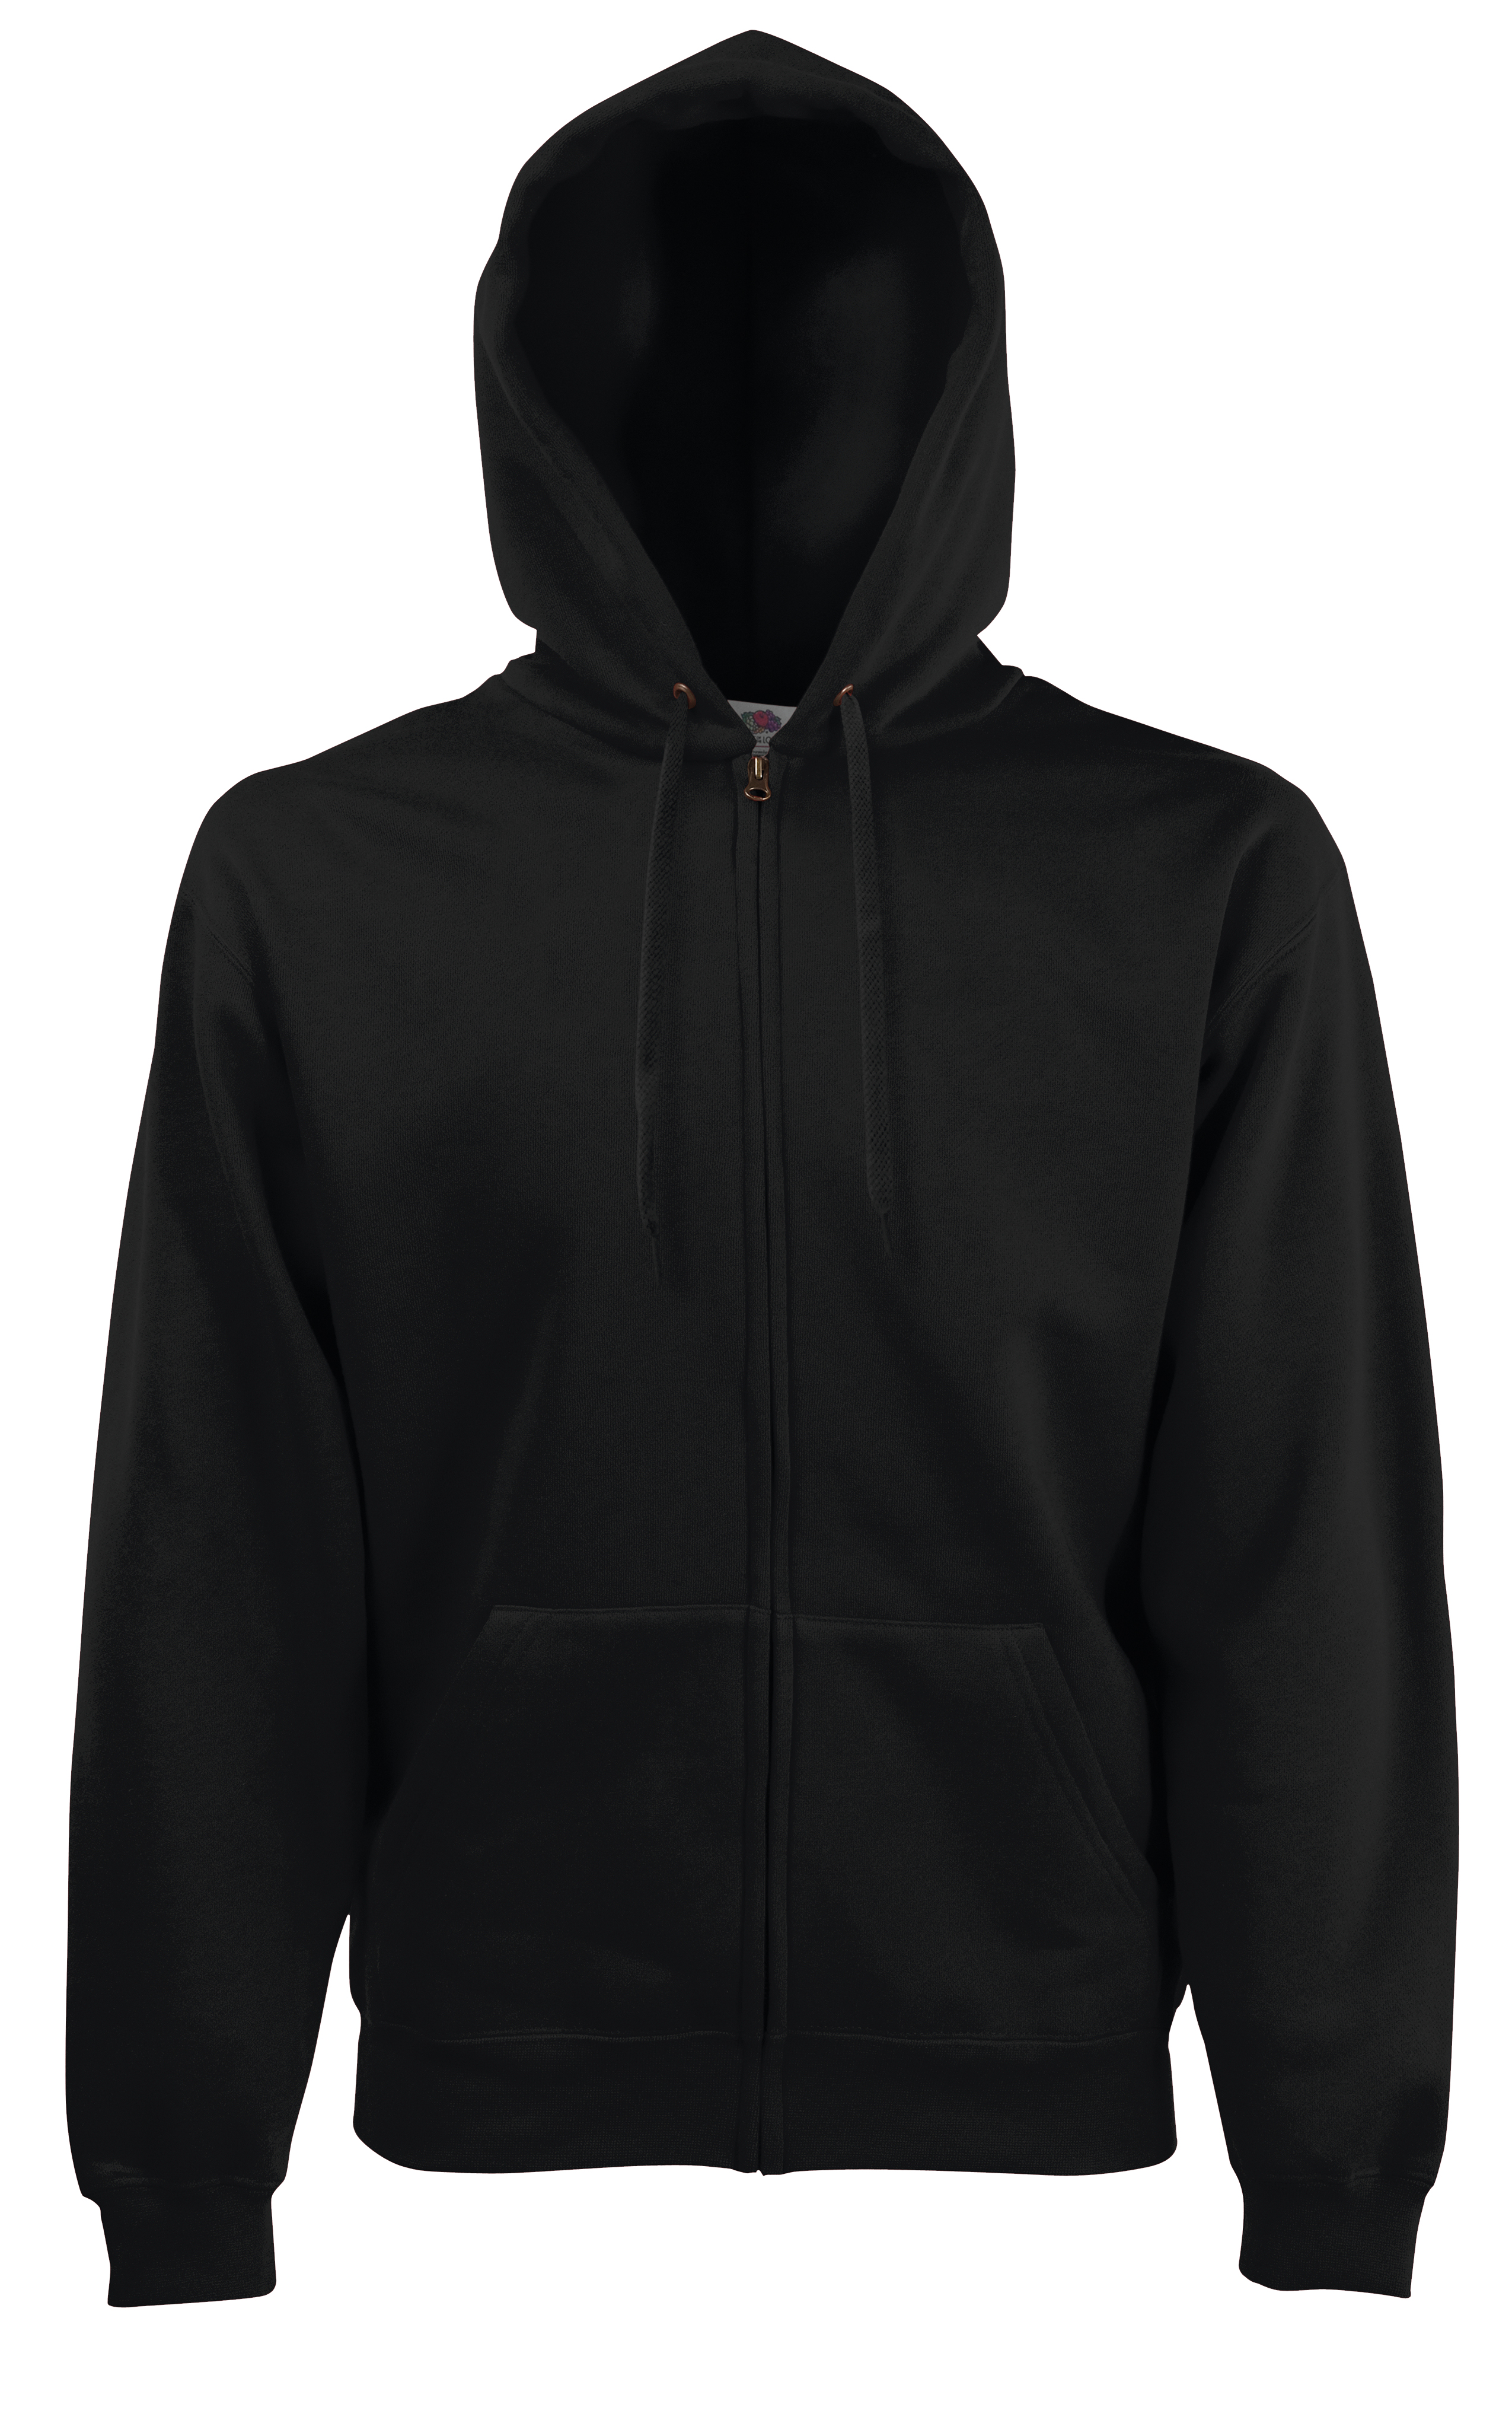 ax-httpswebsystems.s3.amazonaws.comtmp_for_downloadfruit-of-the-loom-premium-70-30-hooded-sweatshirt-jacket-black.jpeg